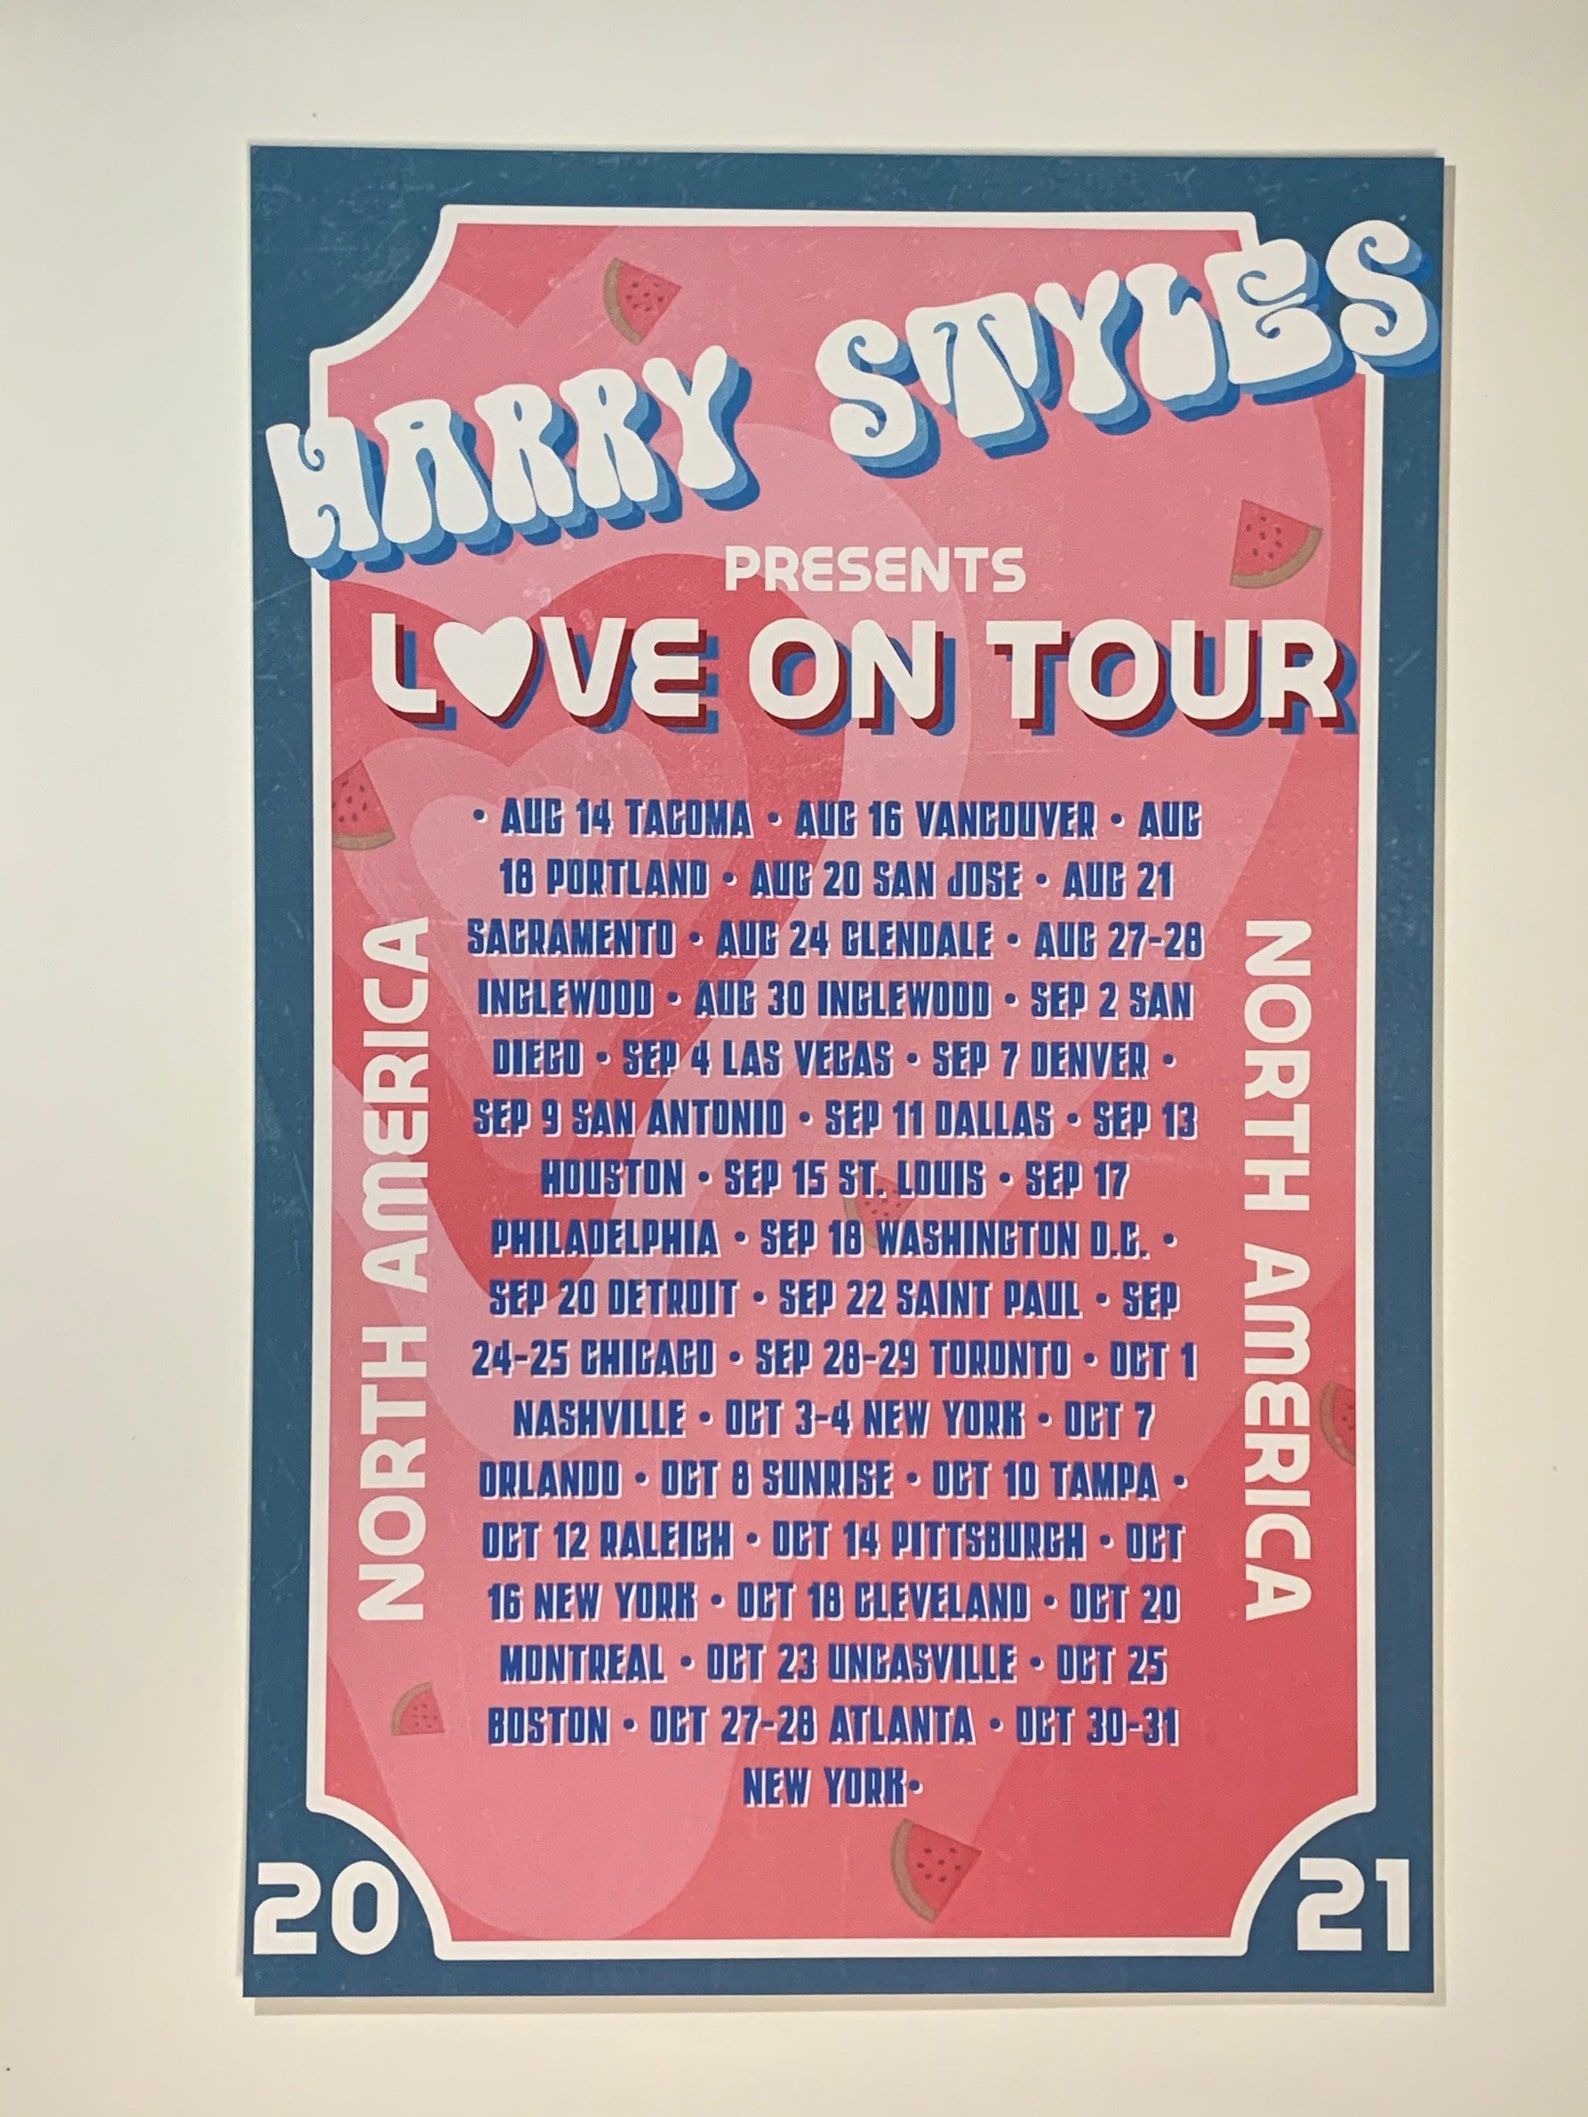 on tour poster